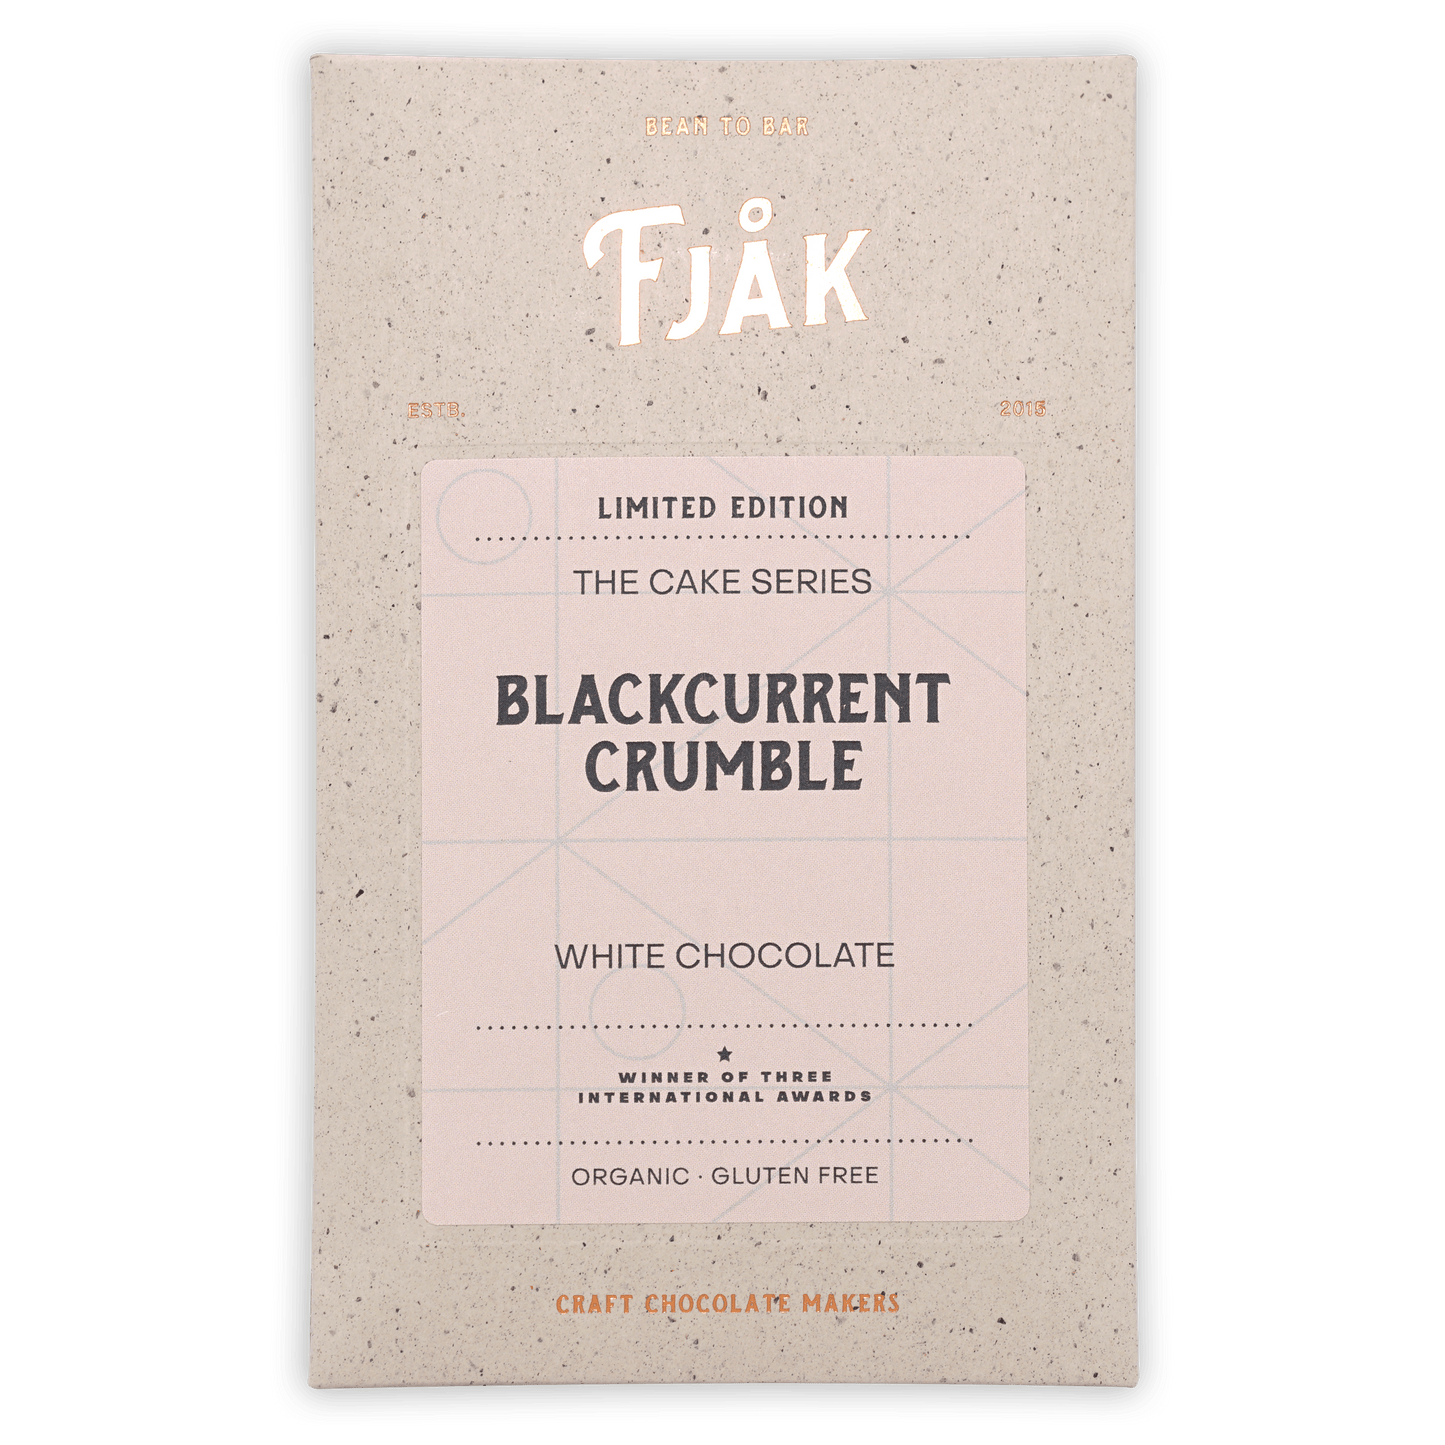 Fjåk Blackcurrant Crumble White Chocolate